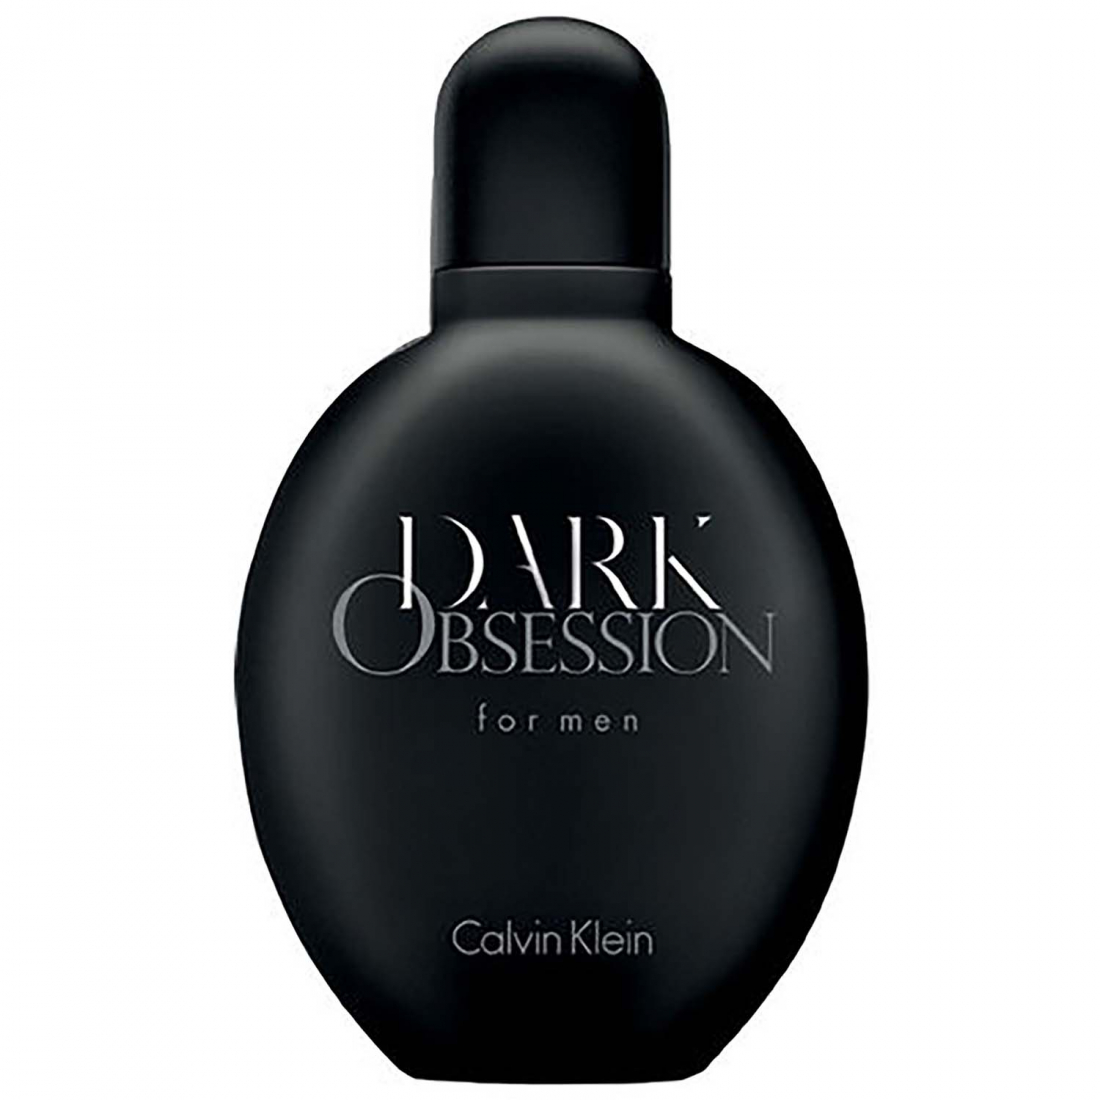 'Dark Obsession' Eau de toilette - 115 ml